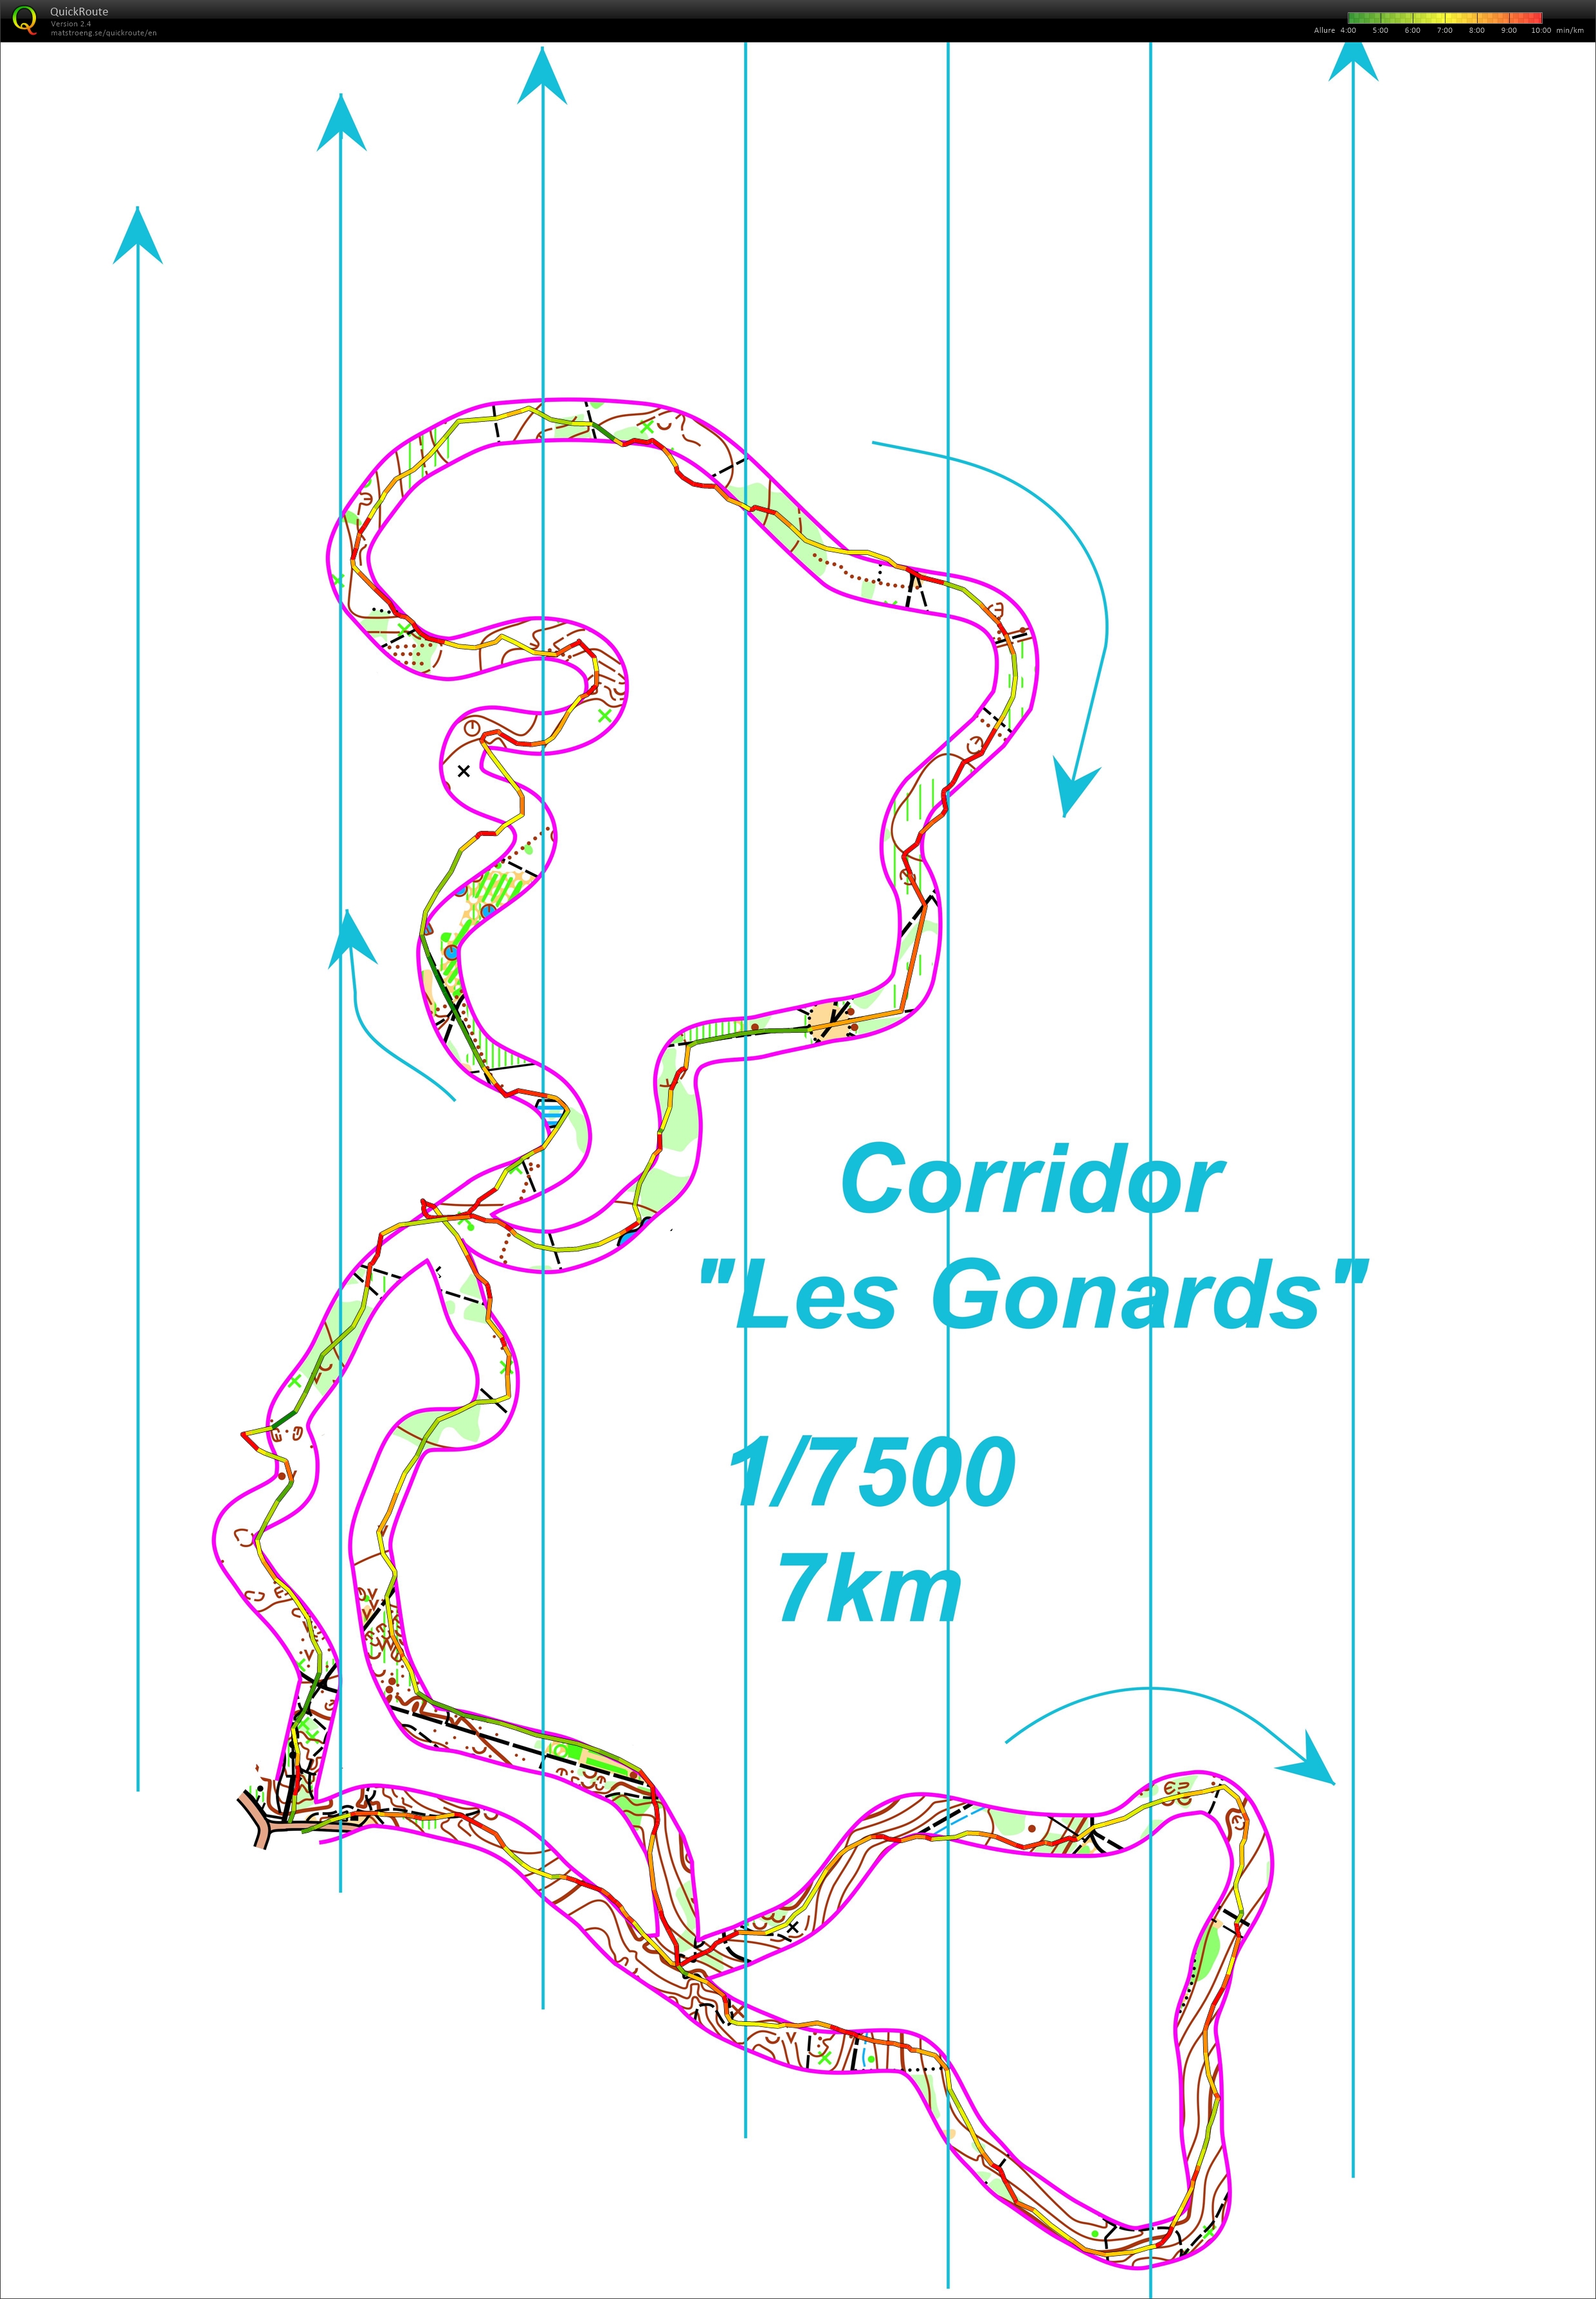 Corridor (2017-11-29)